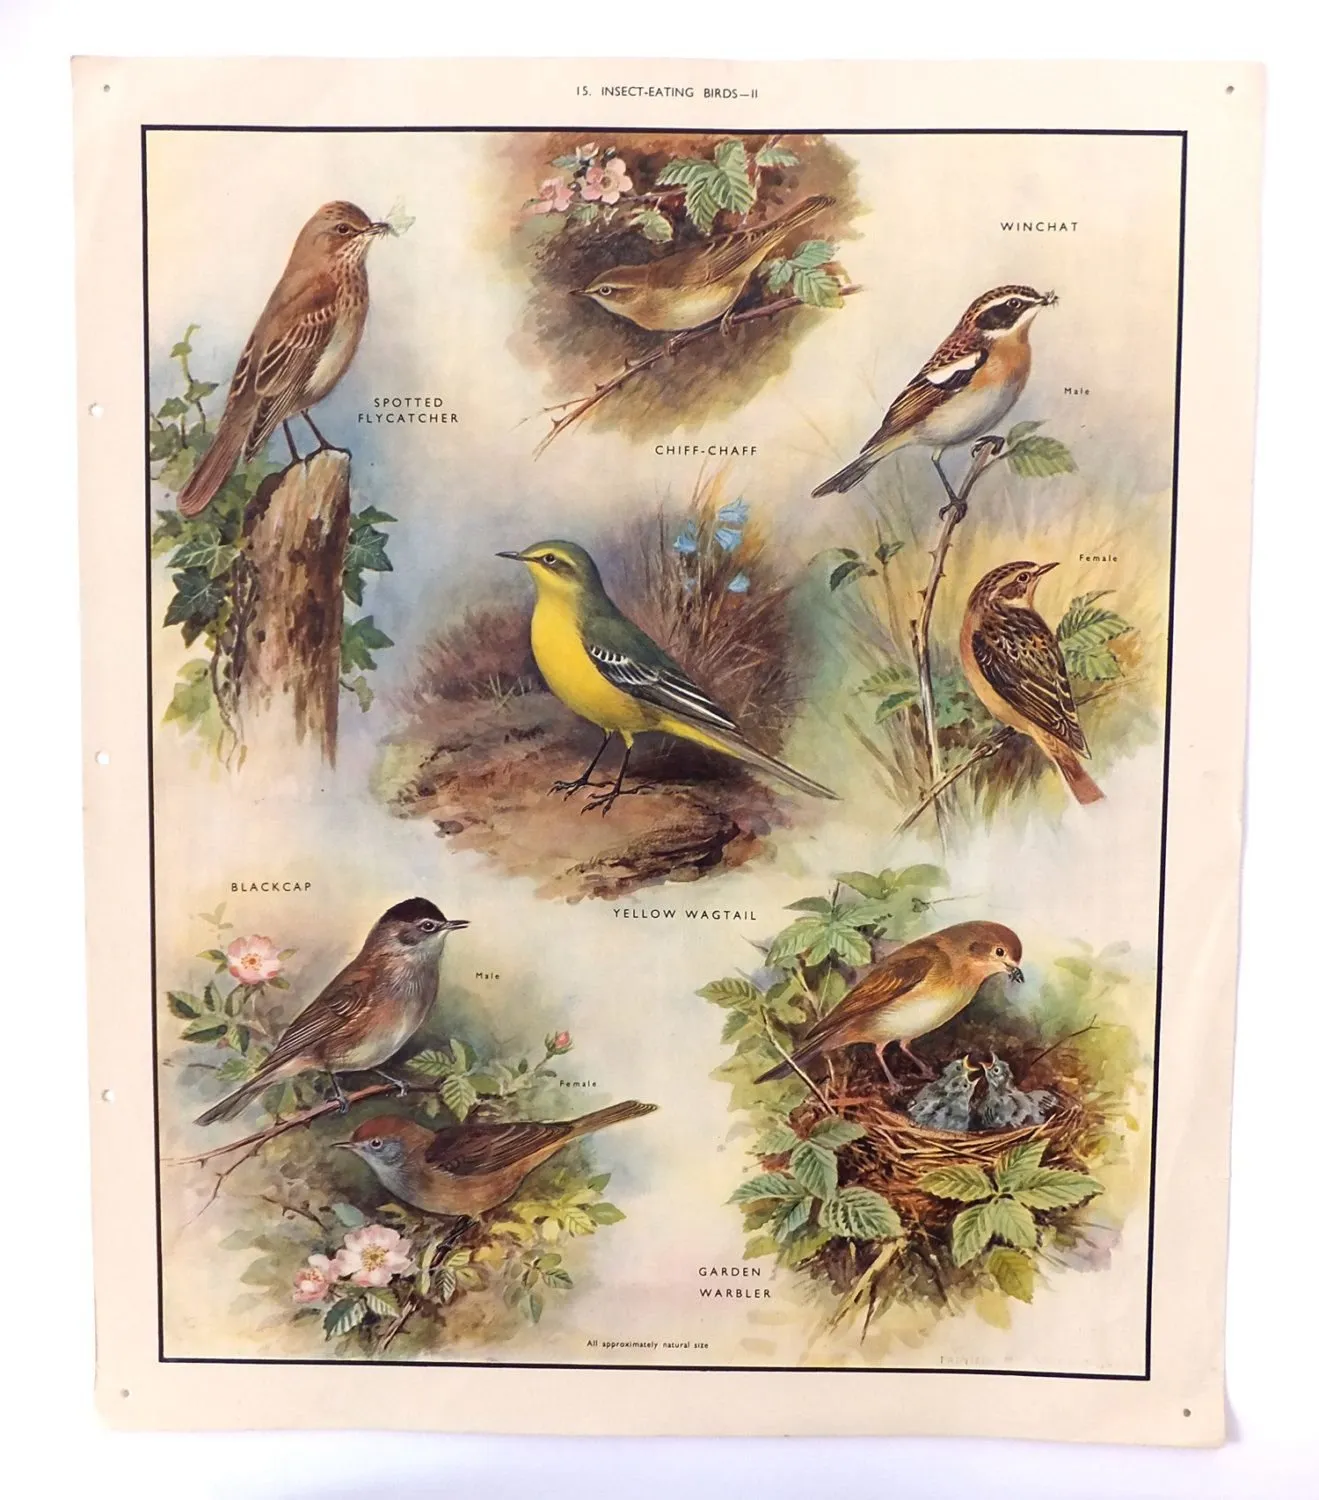 Постер птицы. Постеры с птичками. Плакат птицы. Птичка с плакатом. Птицы винтажный плакат.